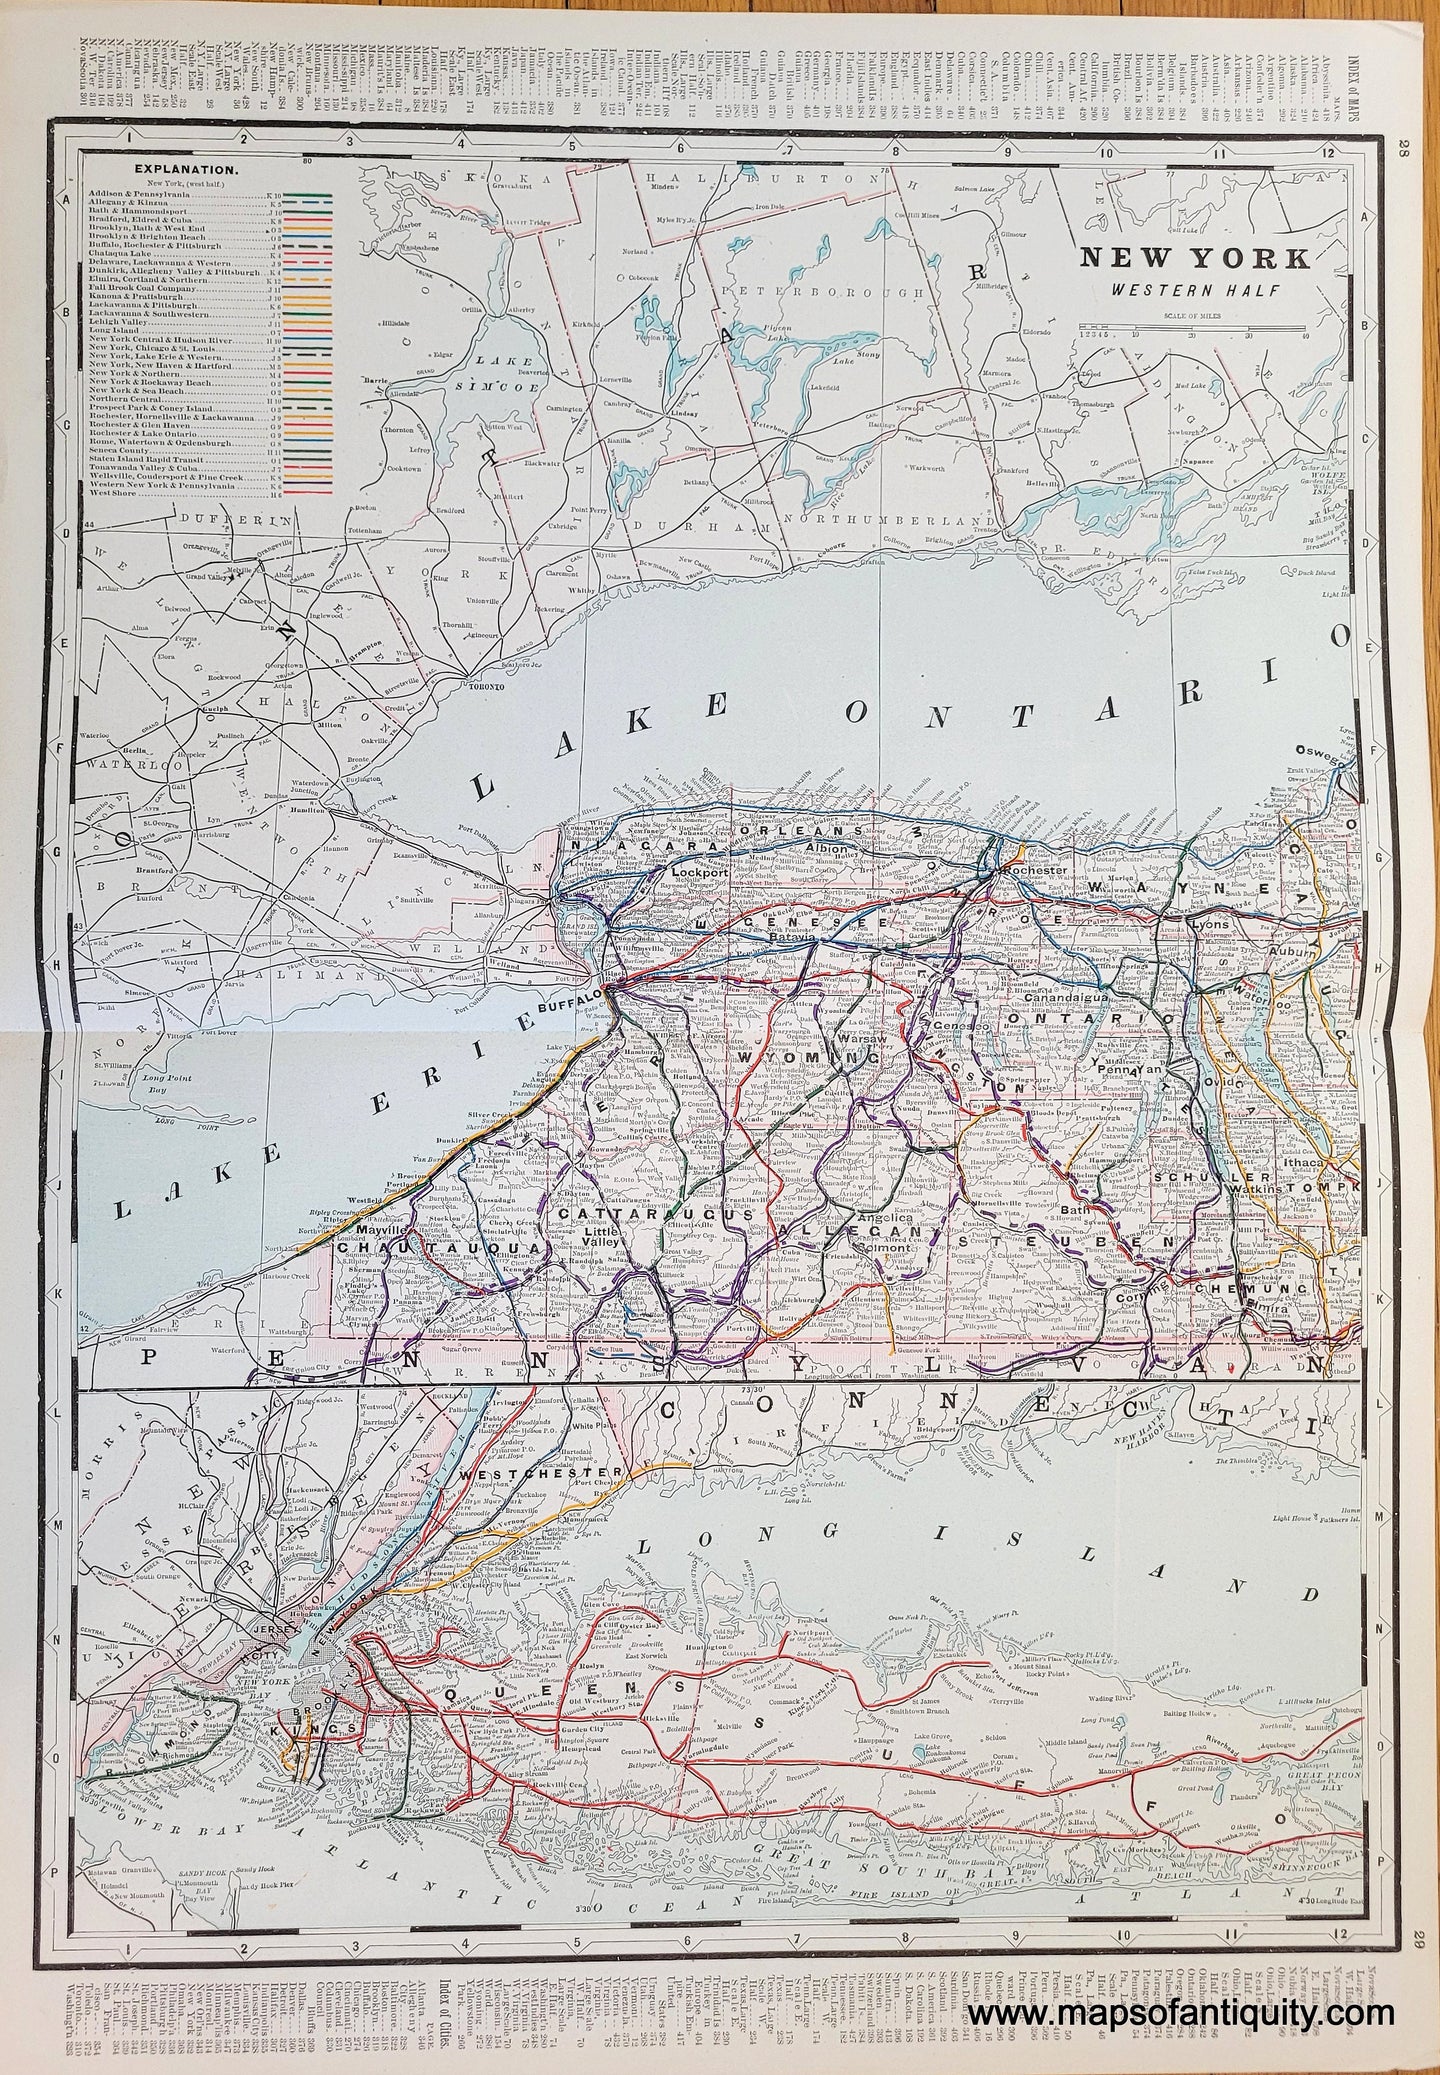 Genuine-Antique-Map-New-York-Western-Half-1900-circa-Cram-Maps-Of-Antiquity